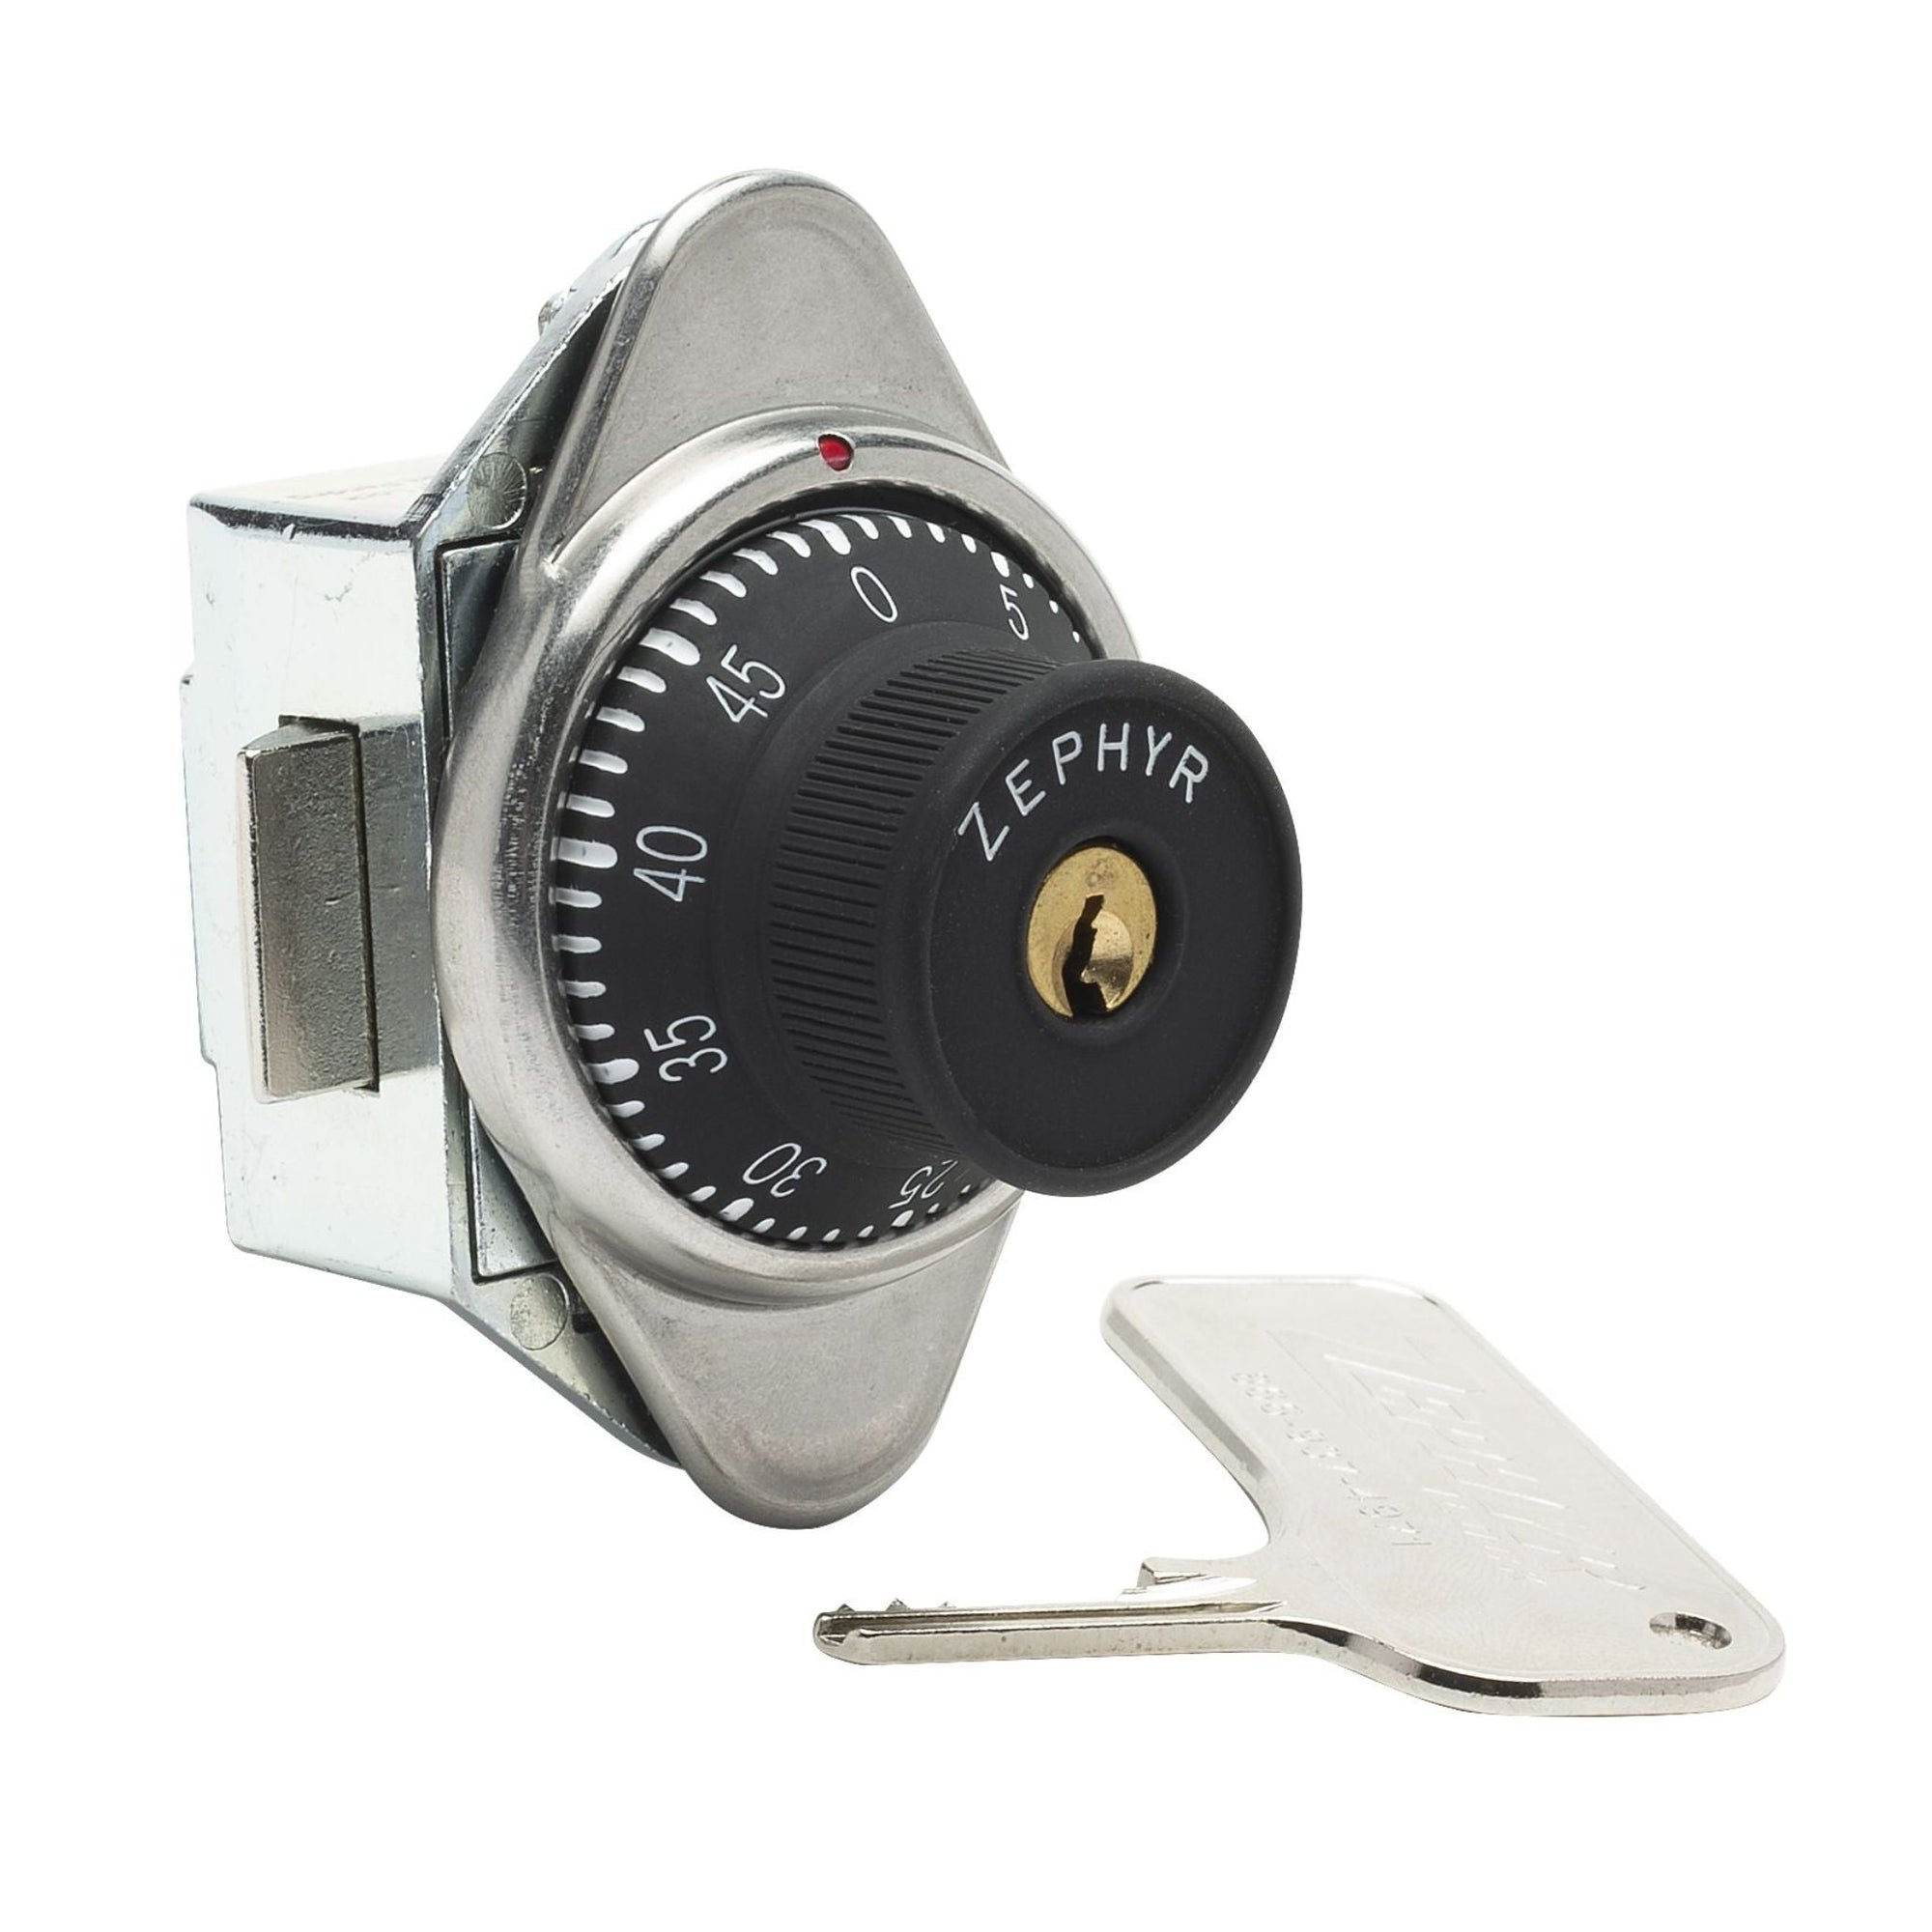 Zephyr Lock 1954 RH Built-In Combination Locker Locks Fit Gravity Style and Multi Point Lockers - The Lock Source